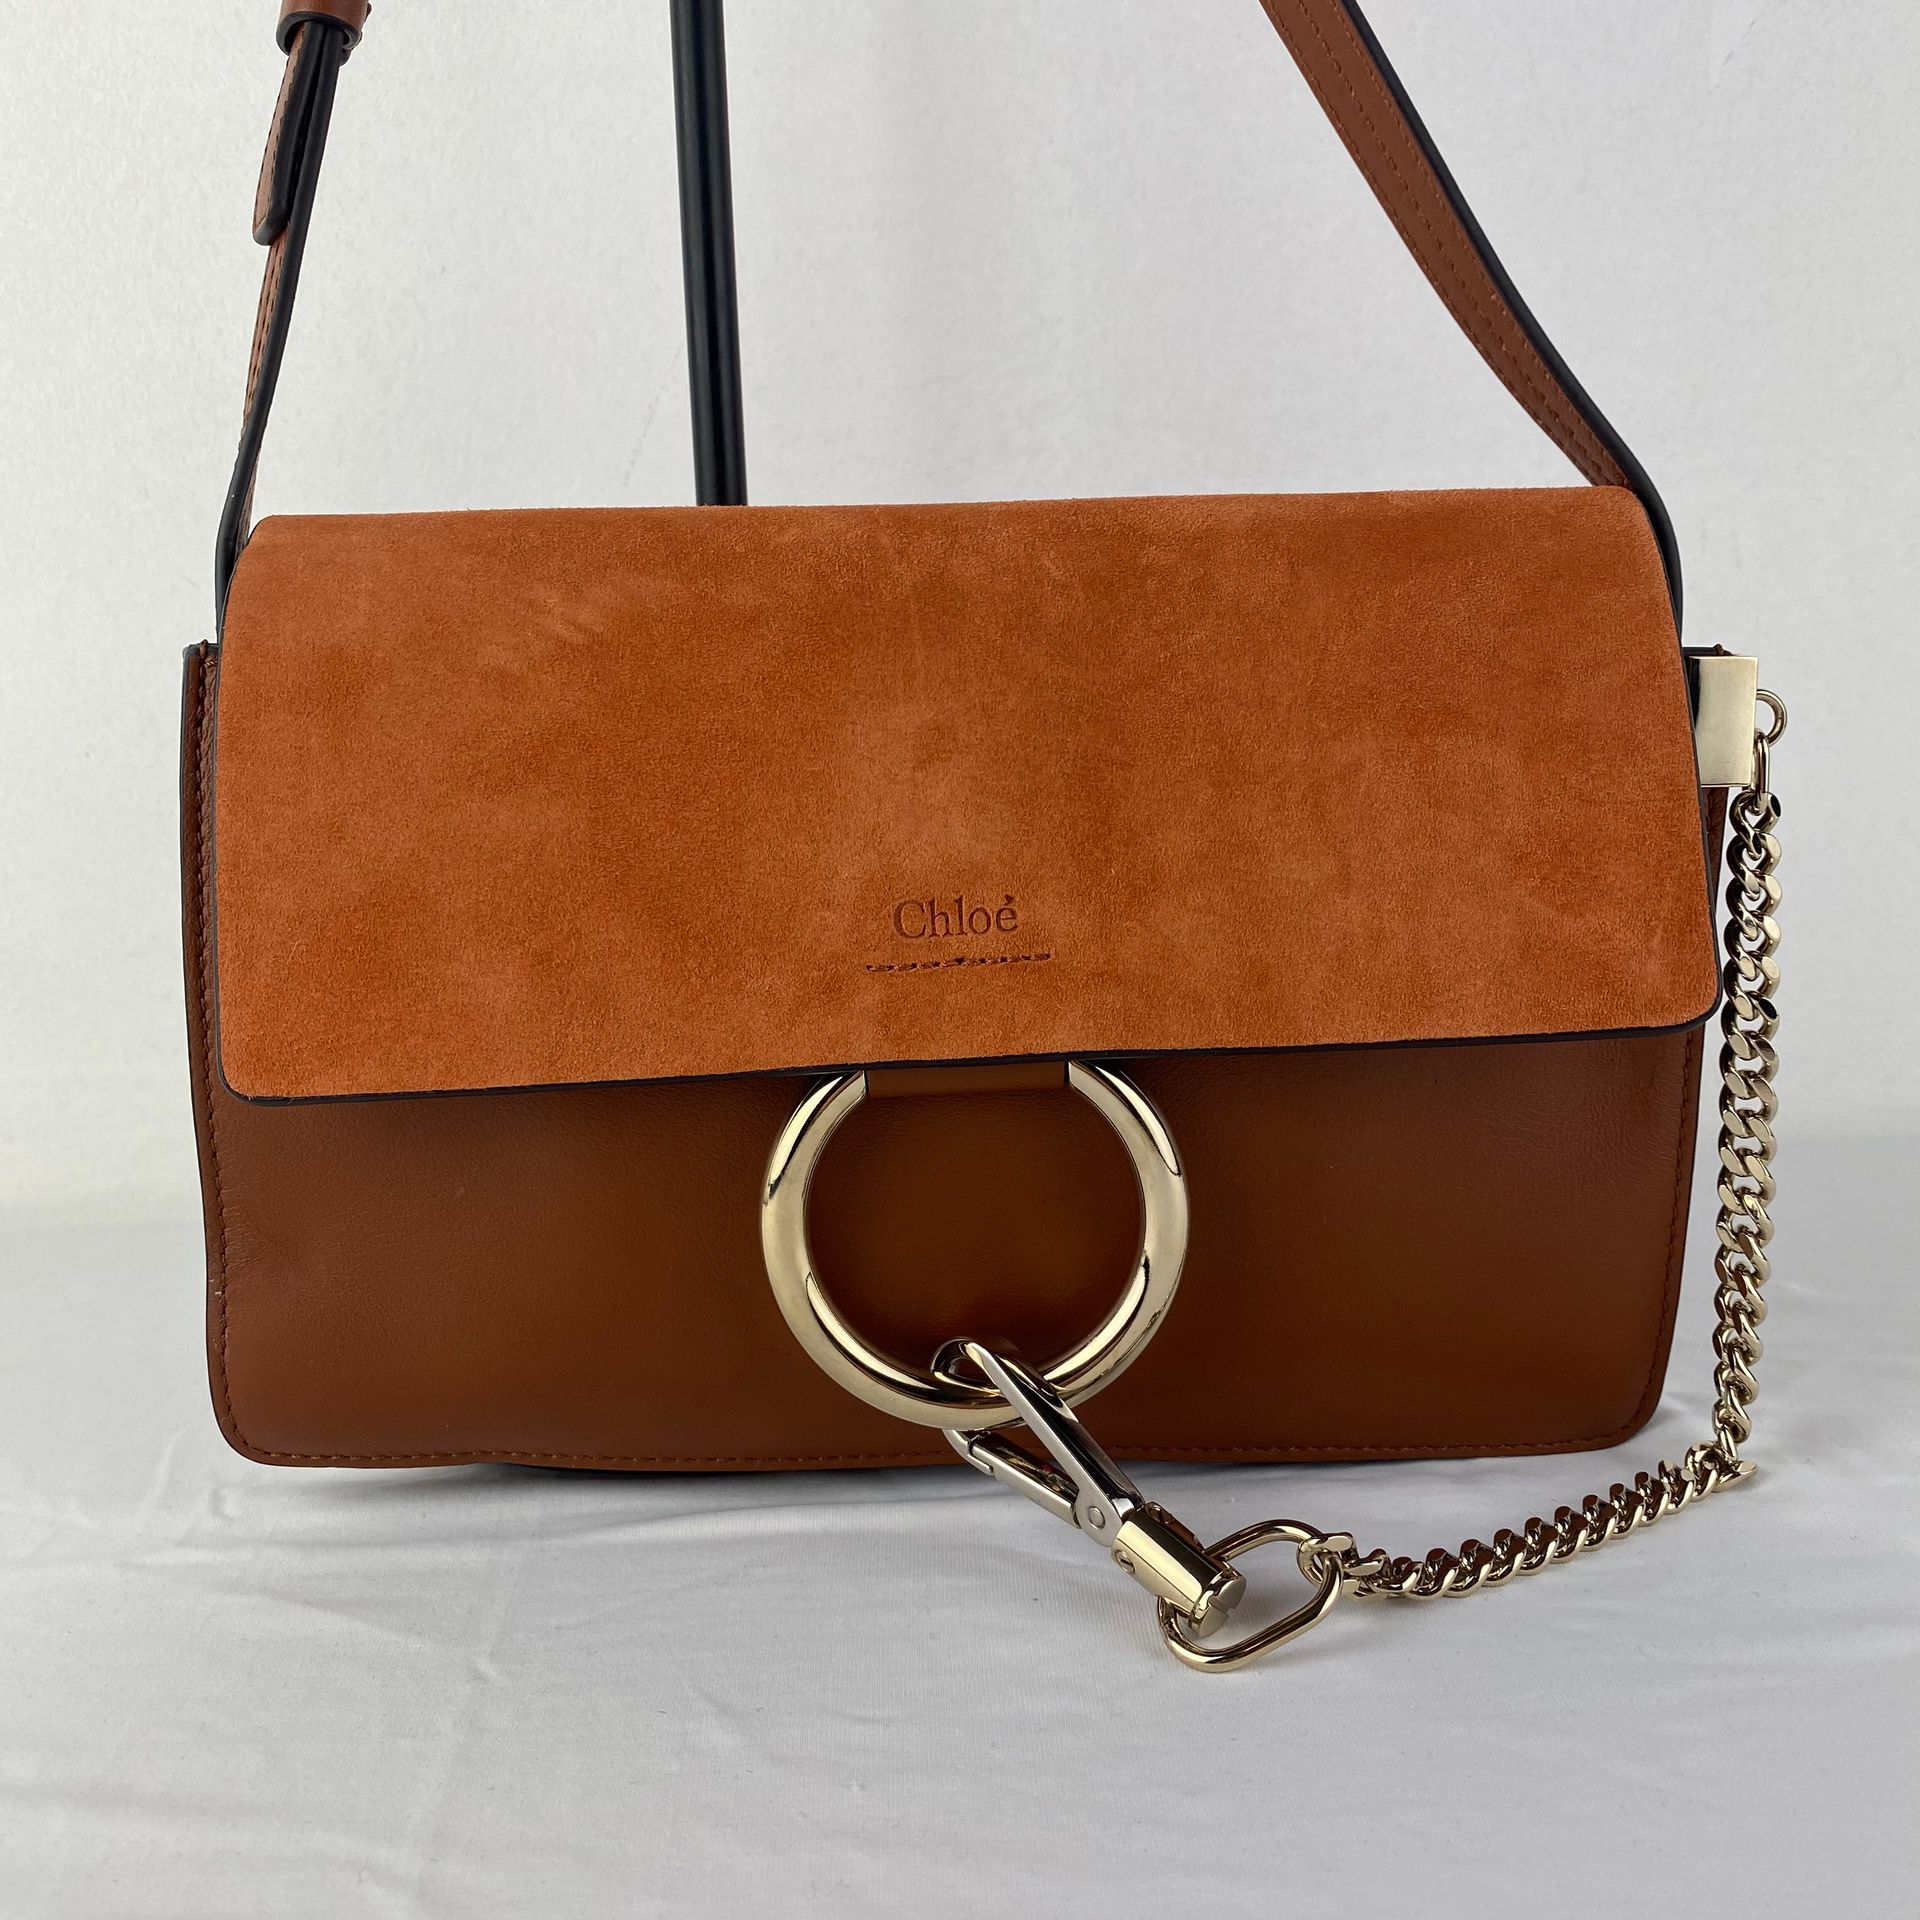 CHLOE CHLOE clutch bag model Faye leather and suede camel size 25/17/3cm N° 04-1&hellip;